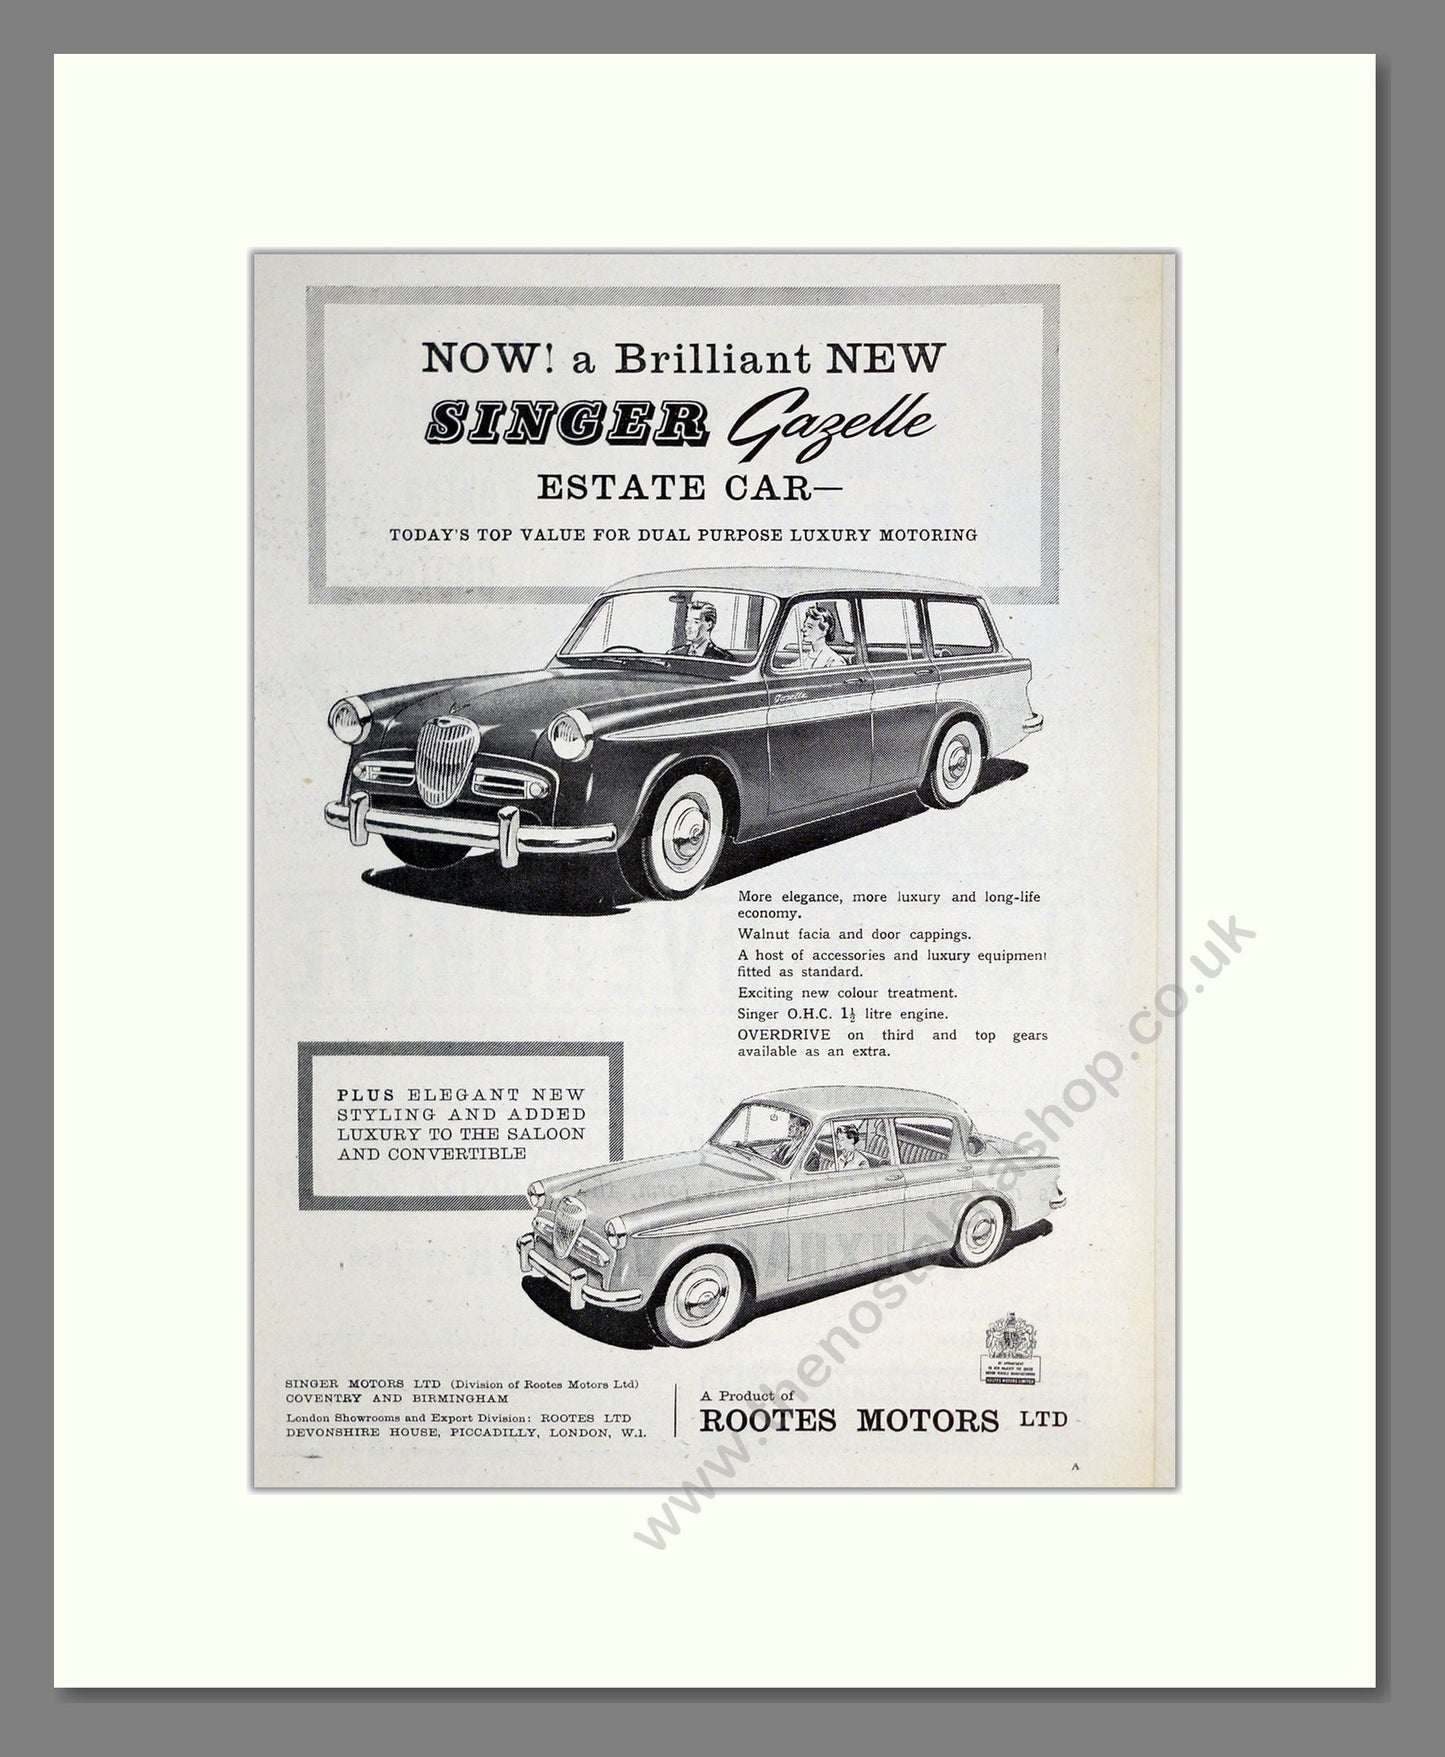 Singer - Gazelle. Vintage Advert 1957 (ref AD62008)